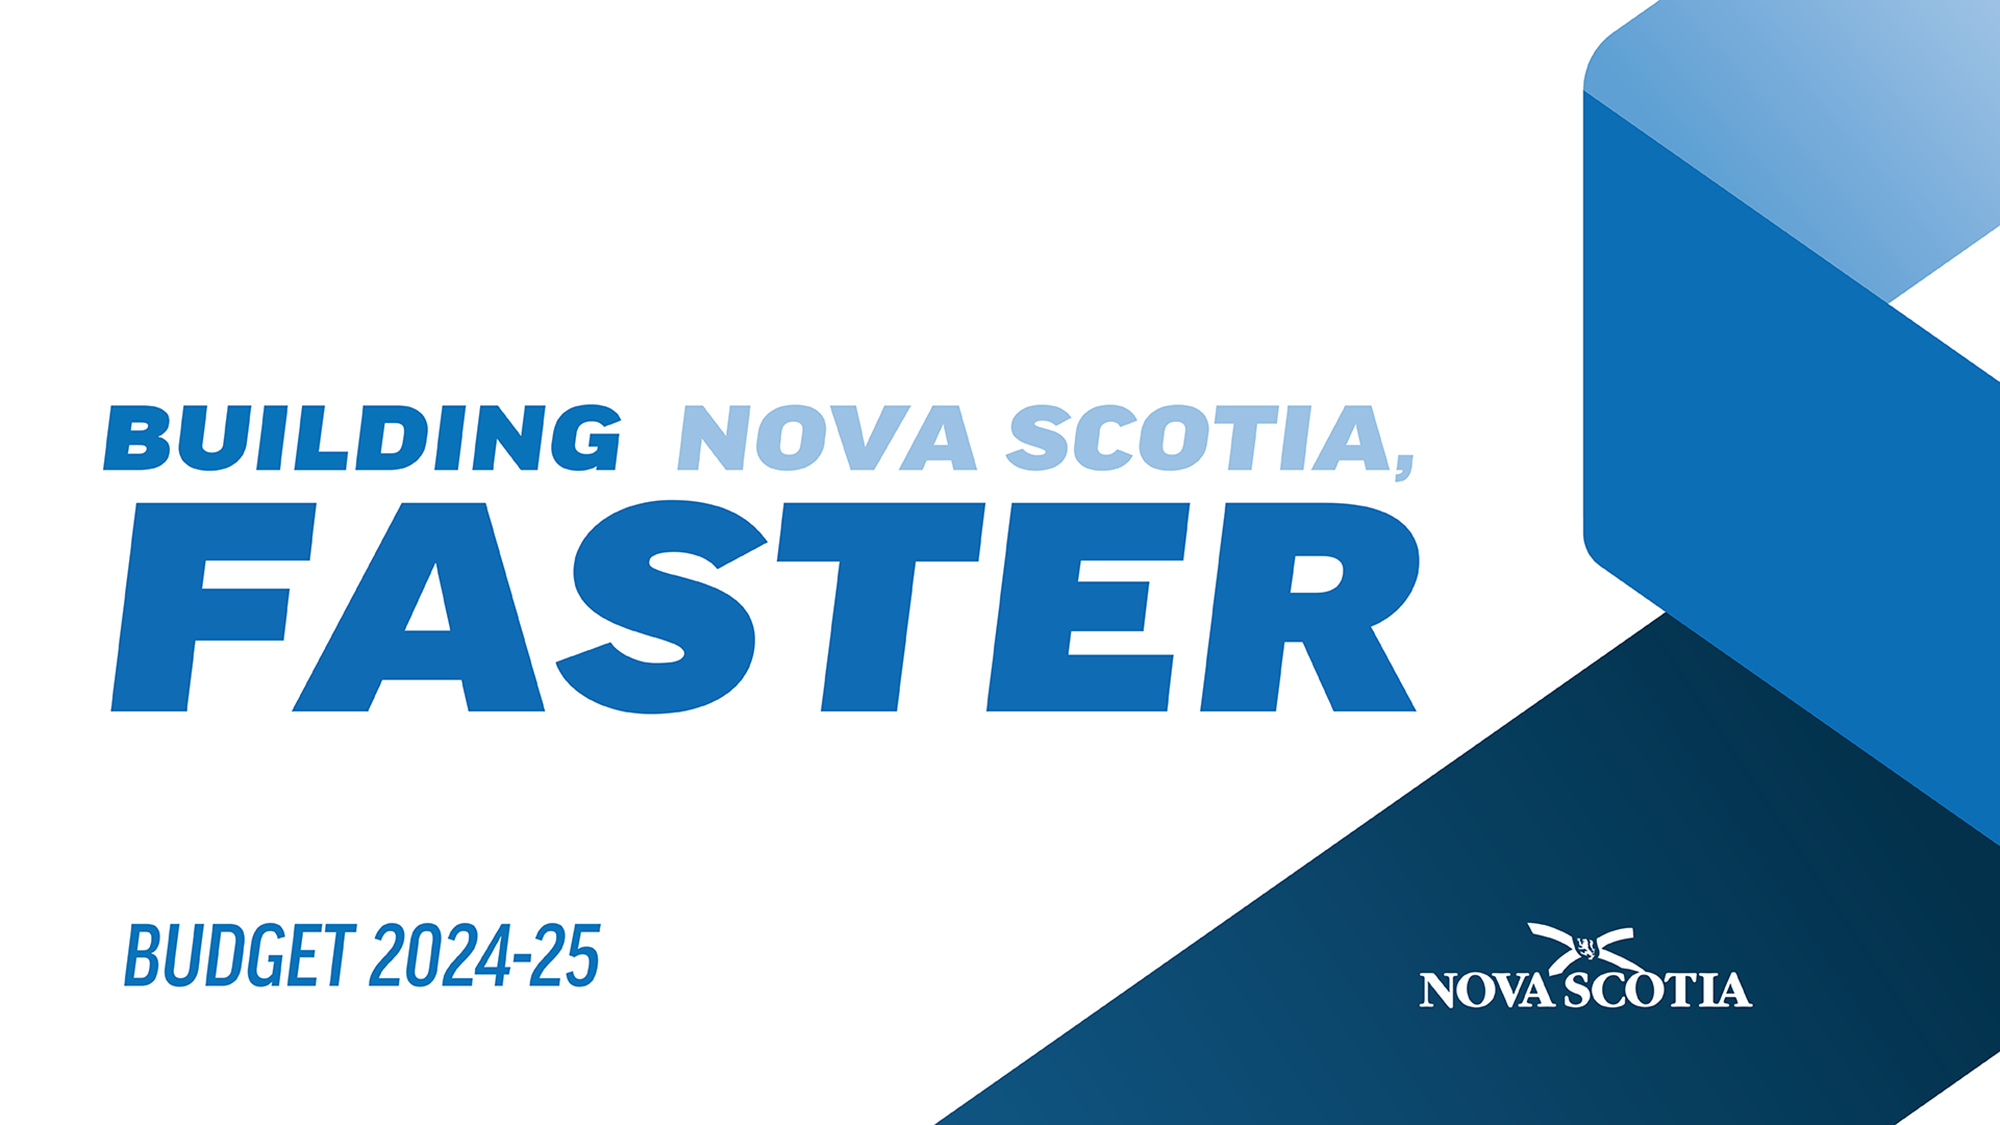 We are building Nova Scotia, faster